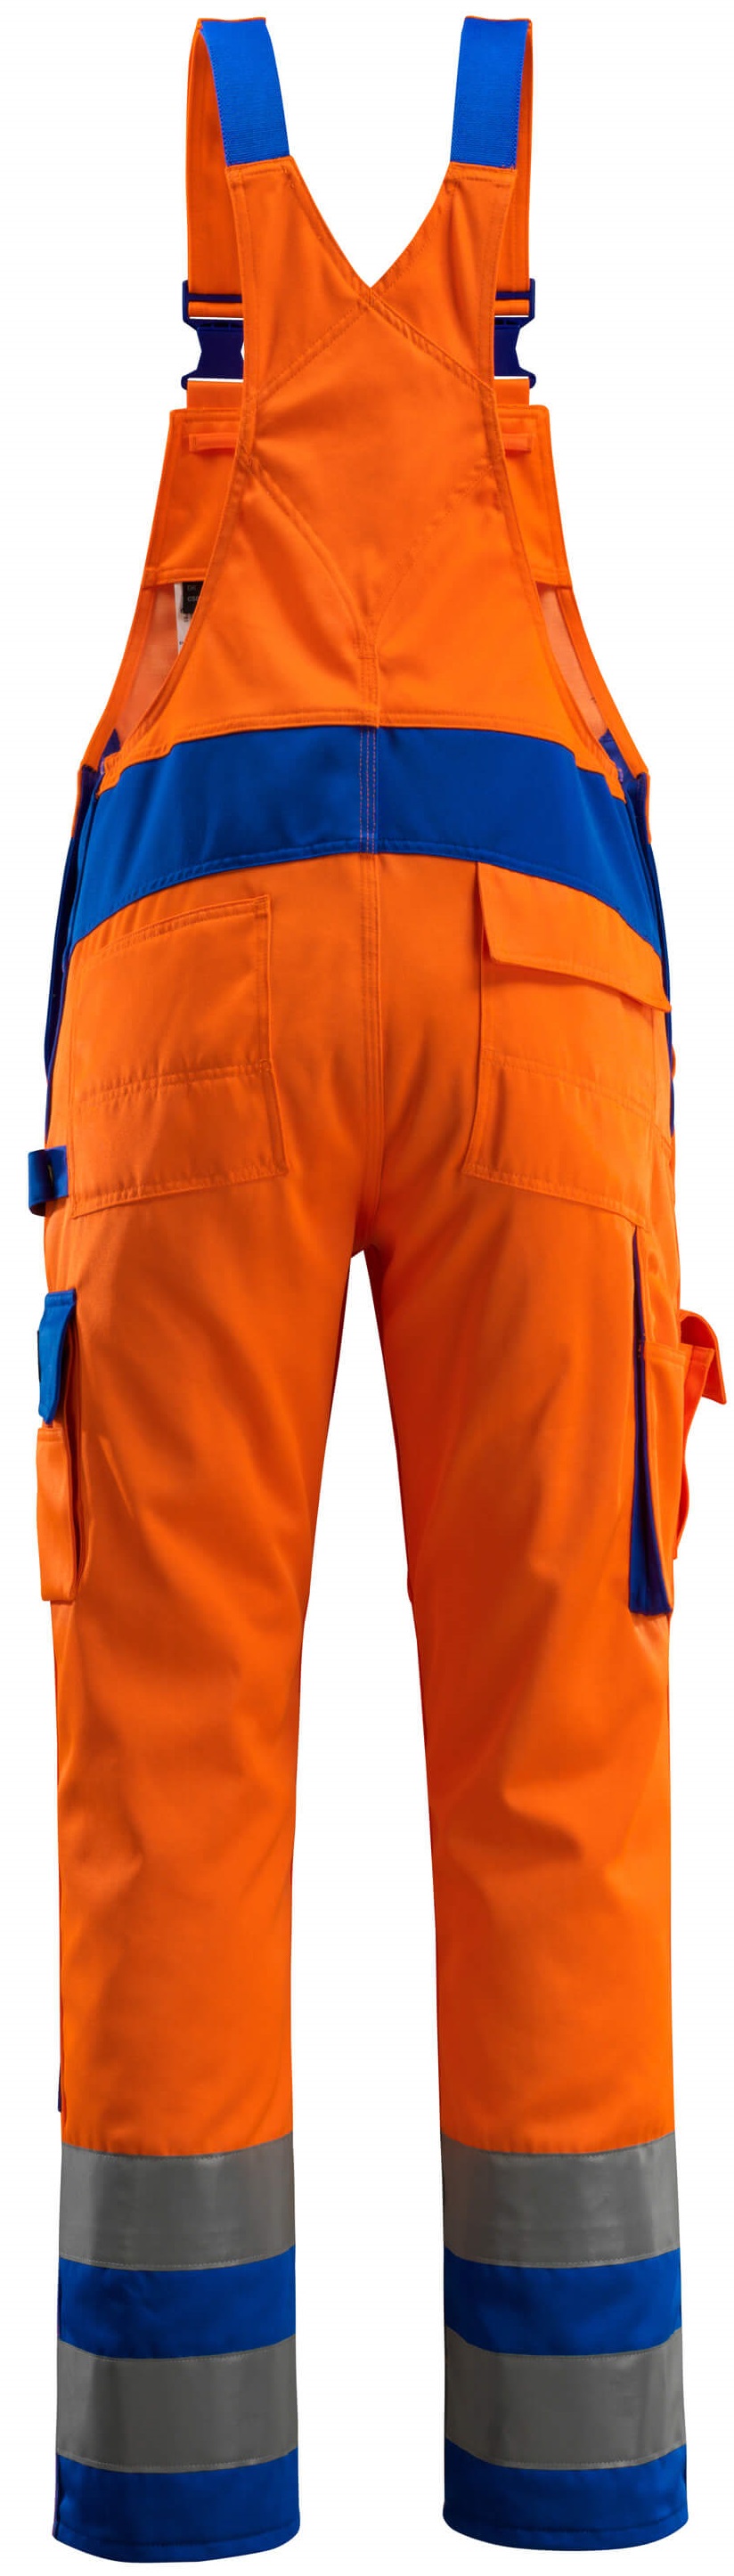 MASCOT-Warnschutz, Warn-Latzhose, Barras, 90 cm, 290 g/m², orange/kornblau
